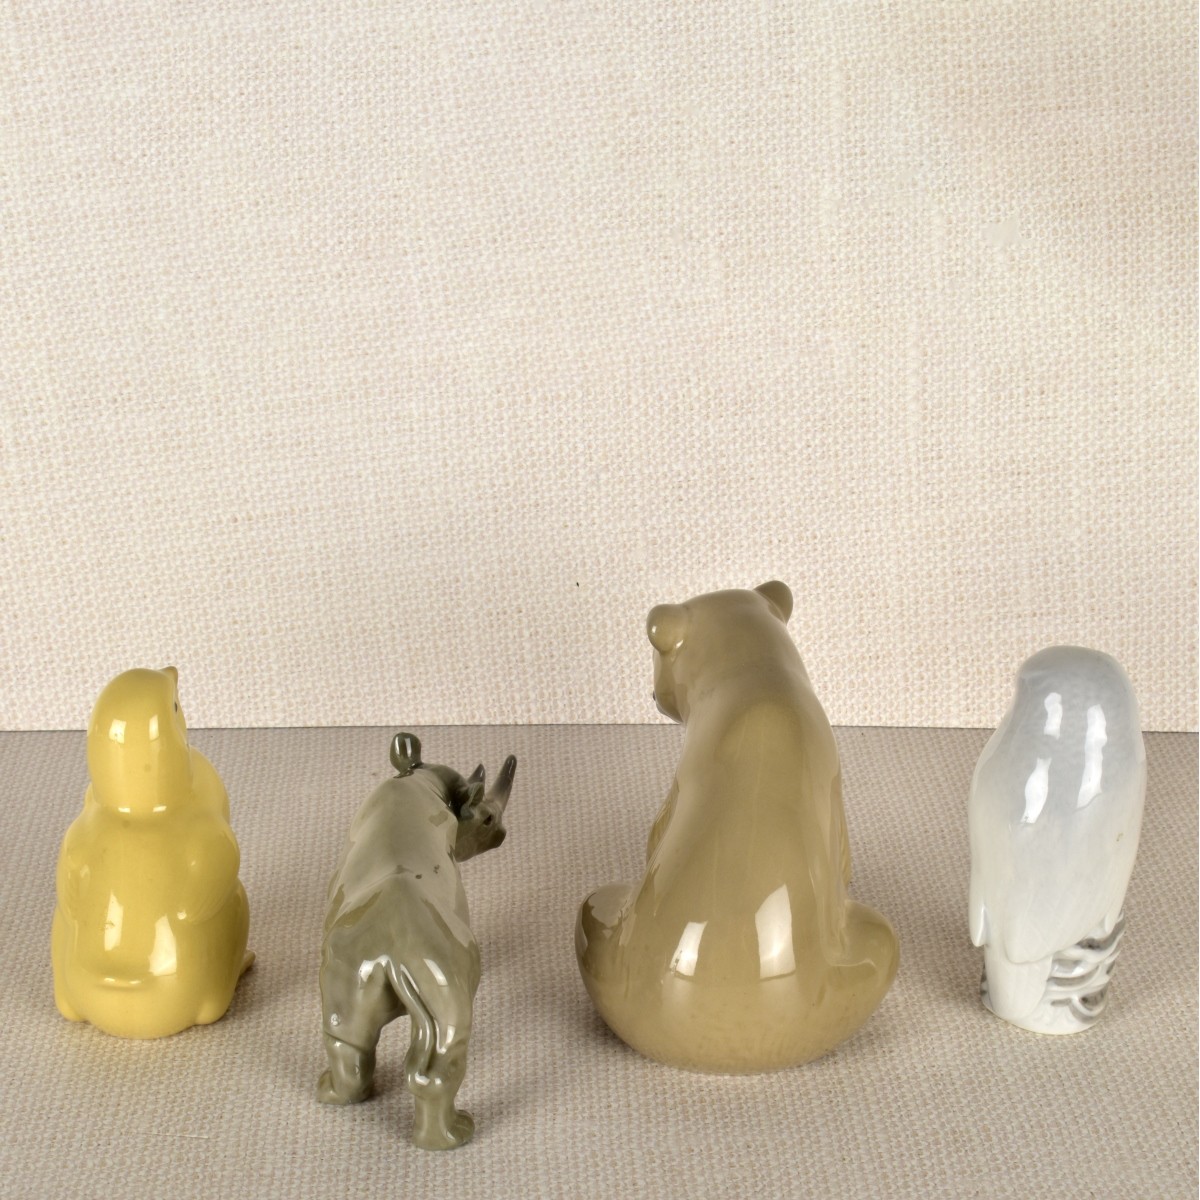 Four Porcelain Animal Figurines